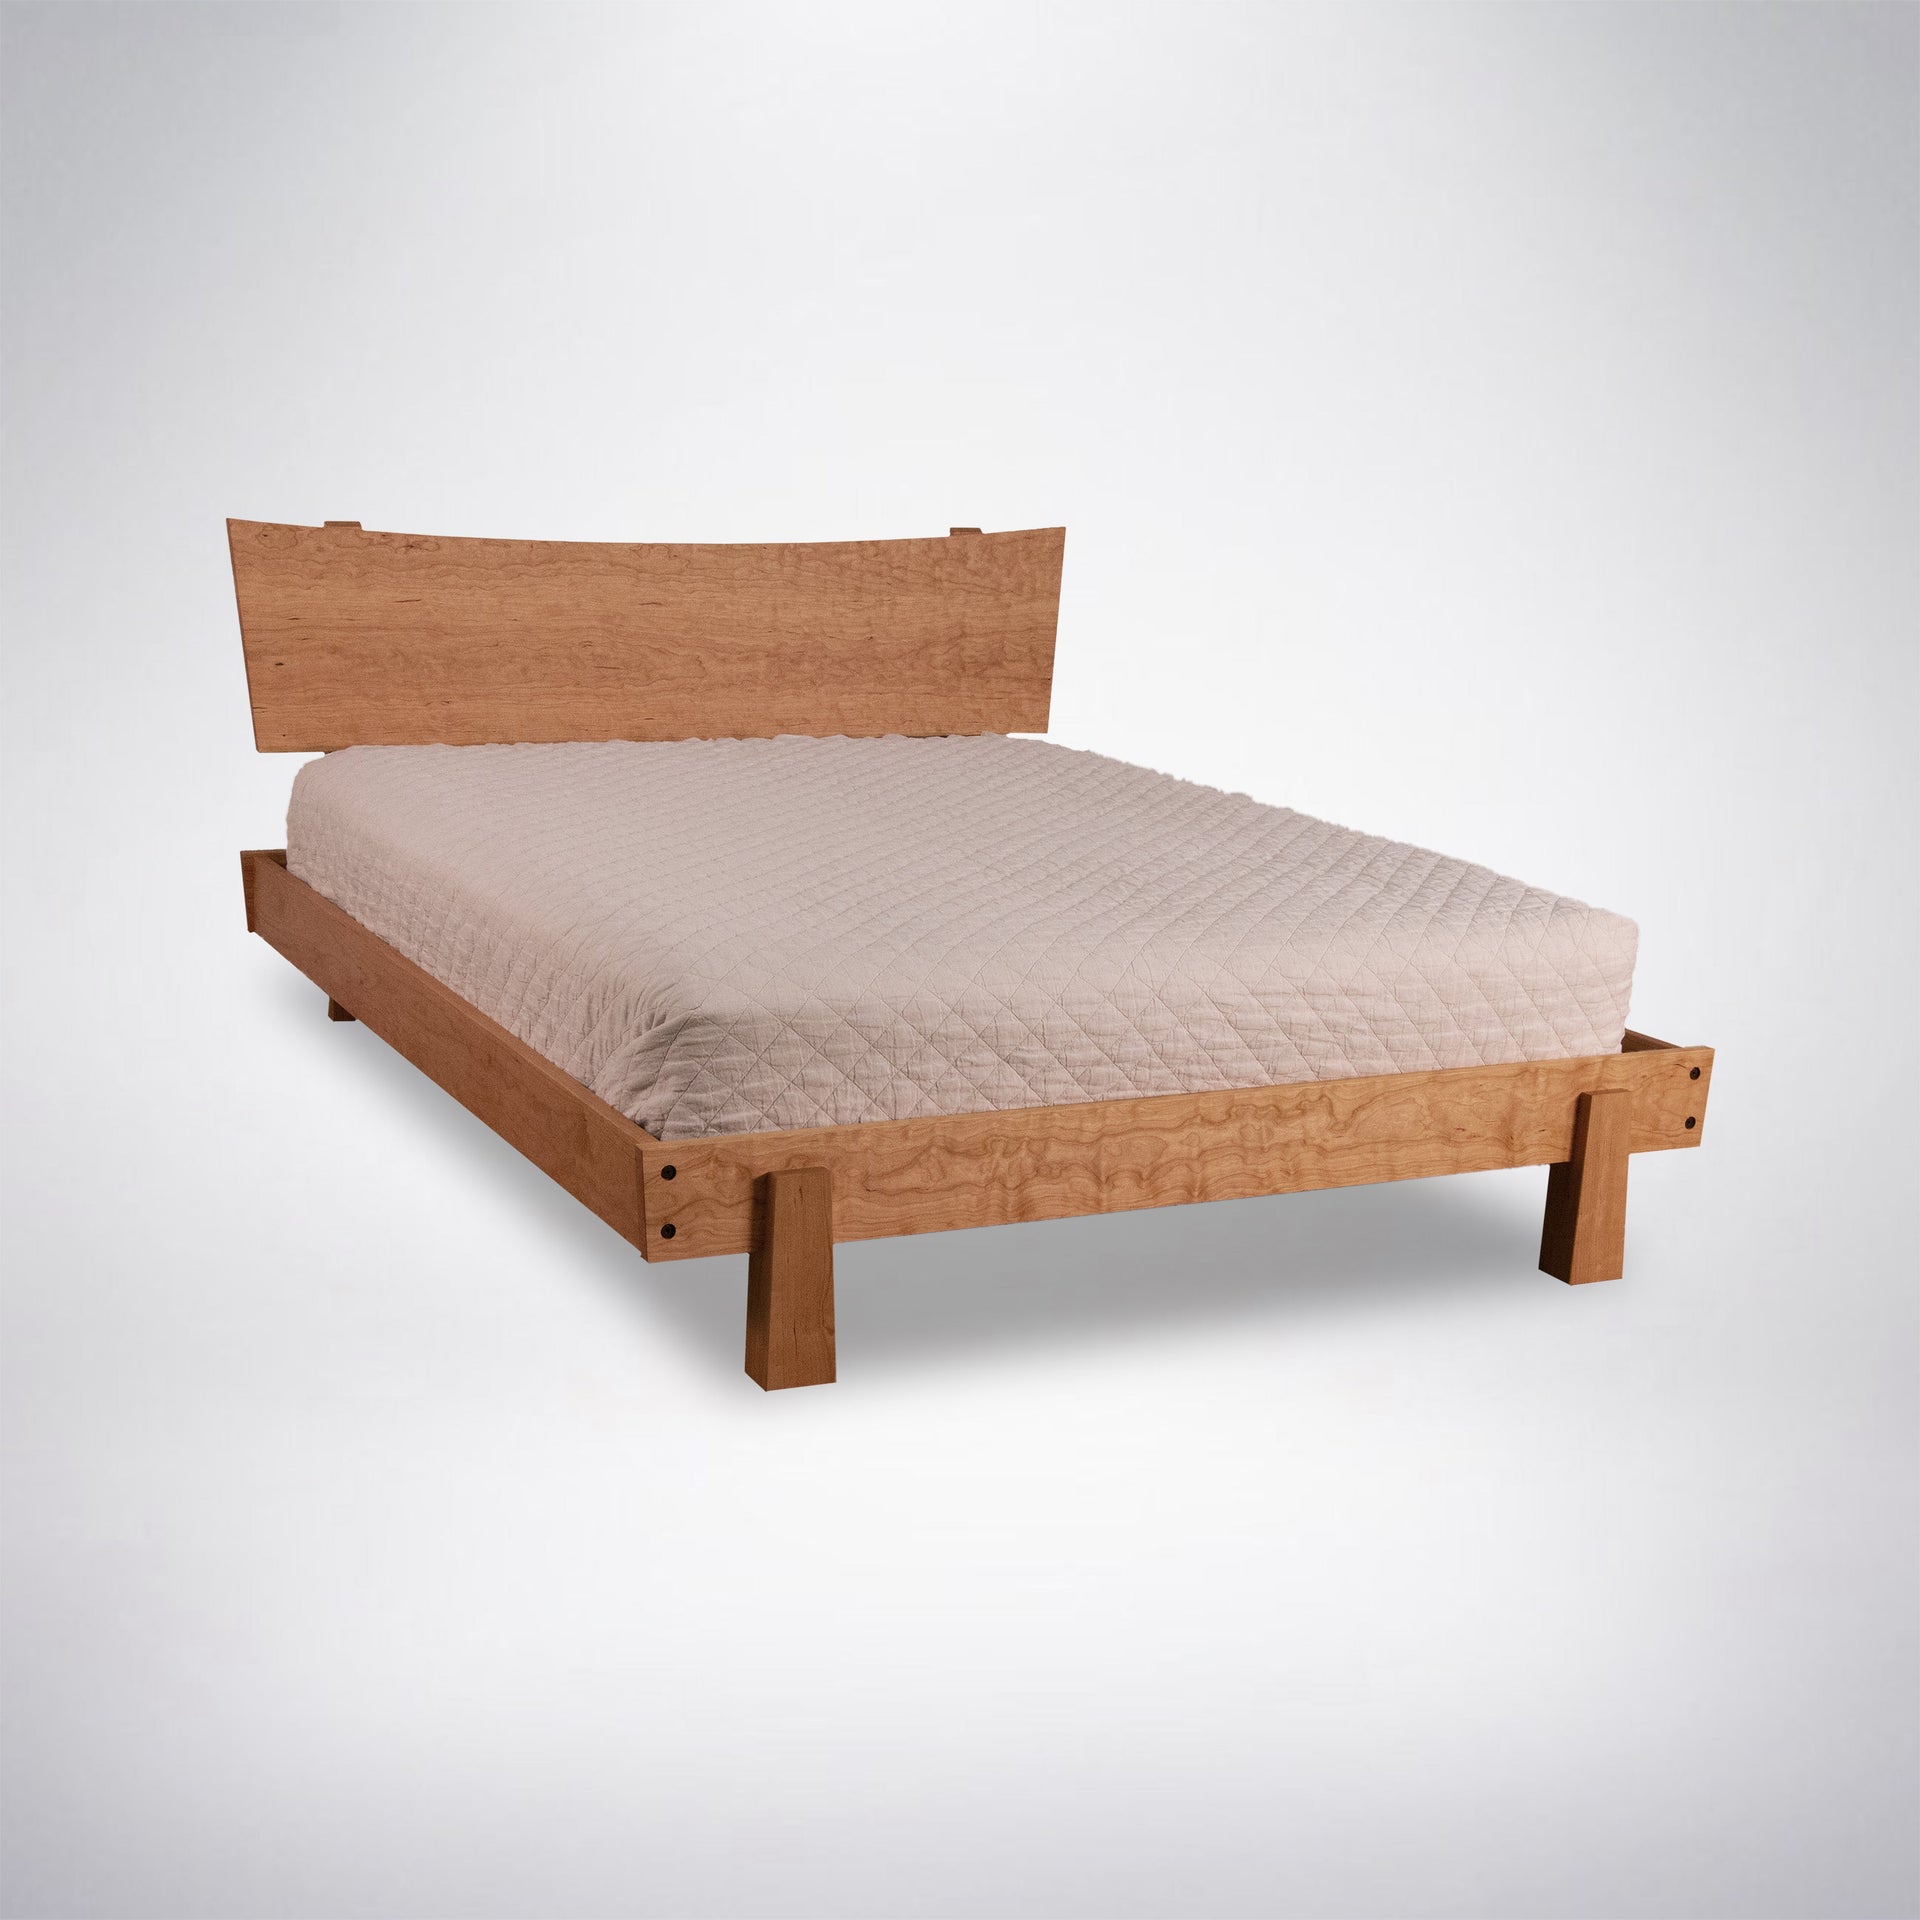 Modern Platform Bed in natural cherry wood.